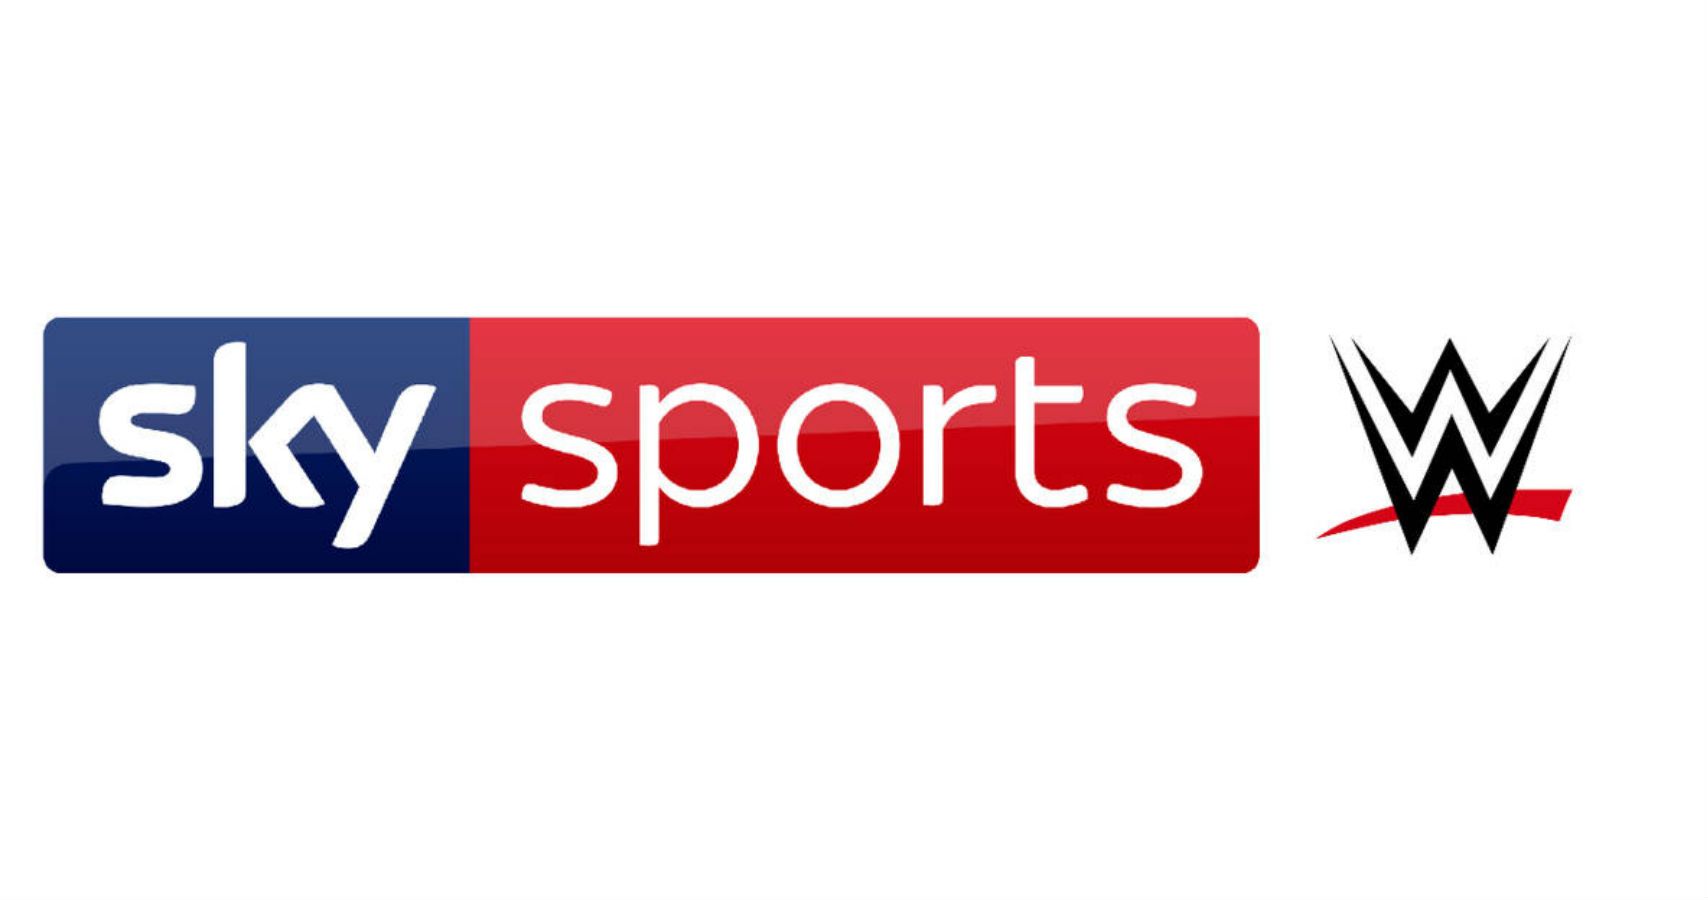 Sky sports live streaming